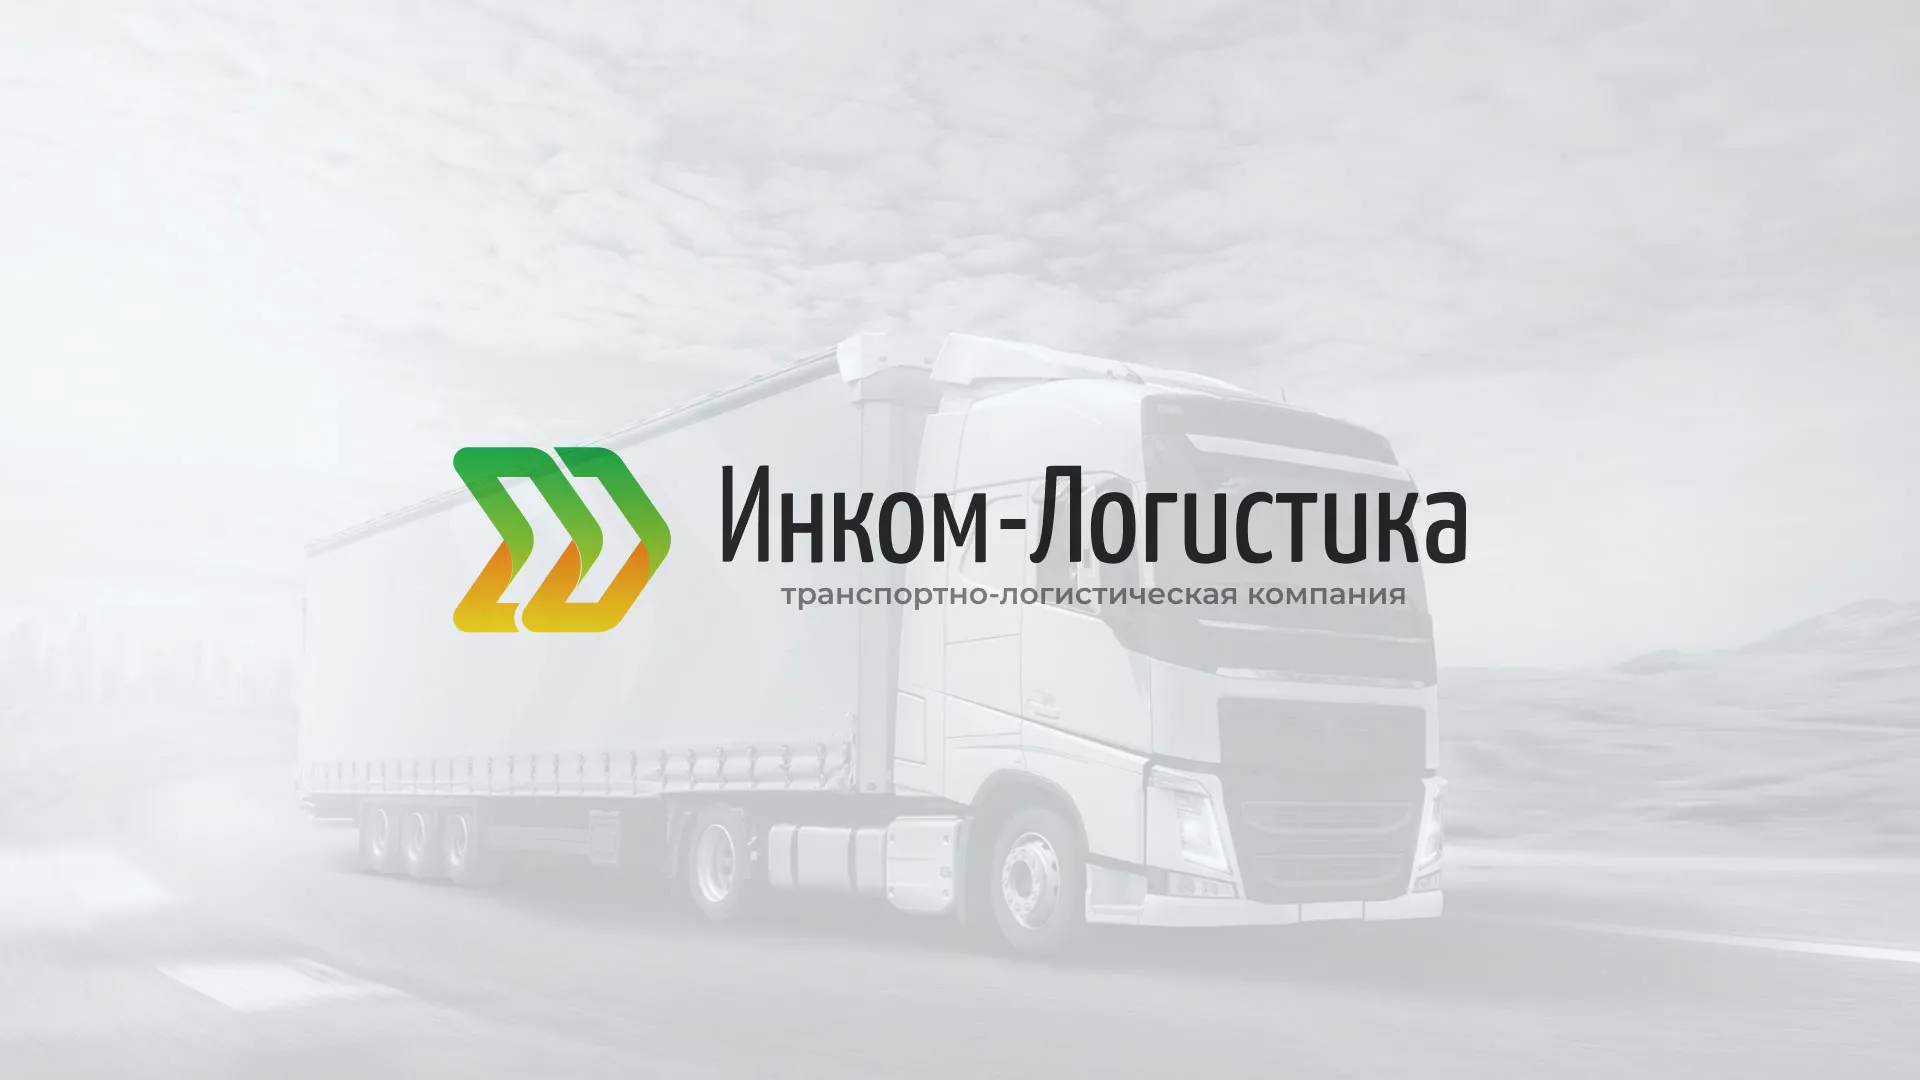 Разработка логотипа и сайта компании «Инком-Логистика» в Красноярске